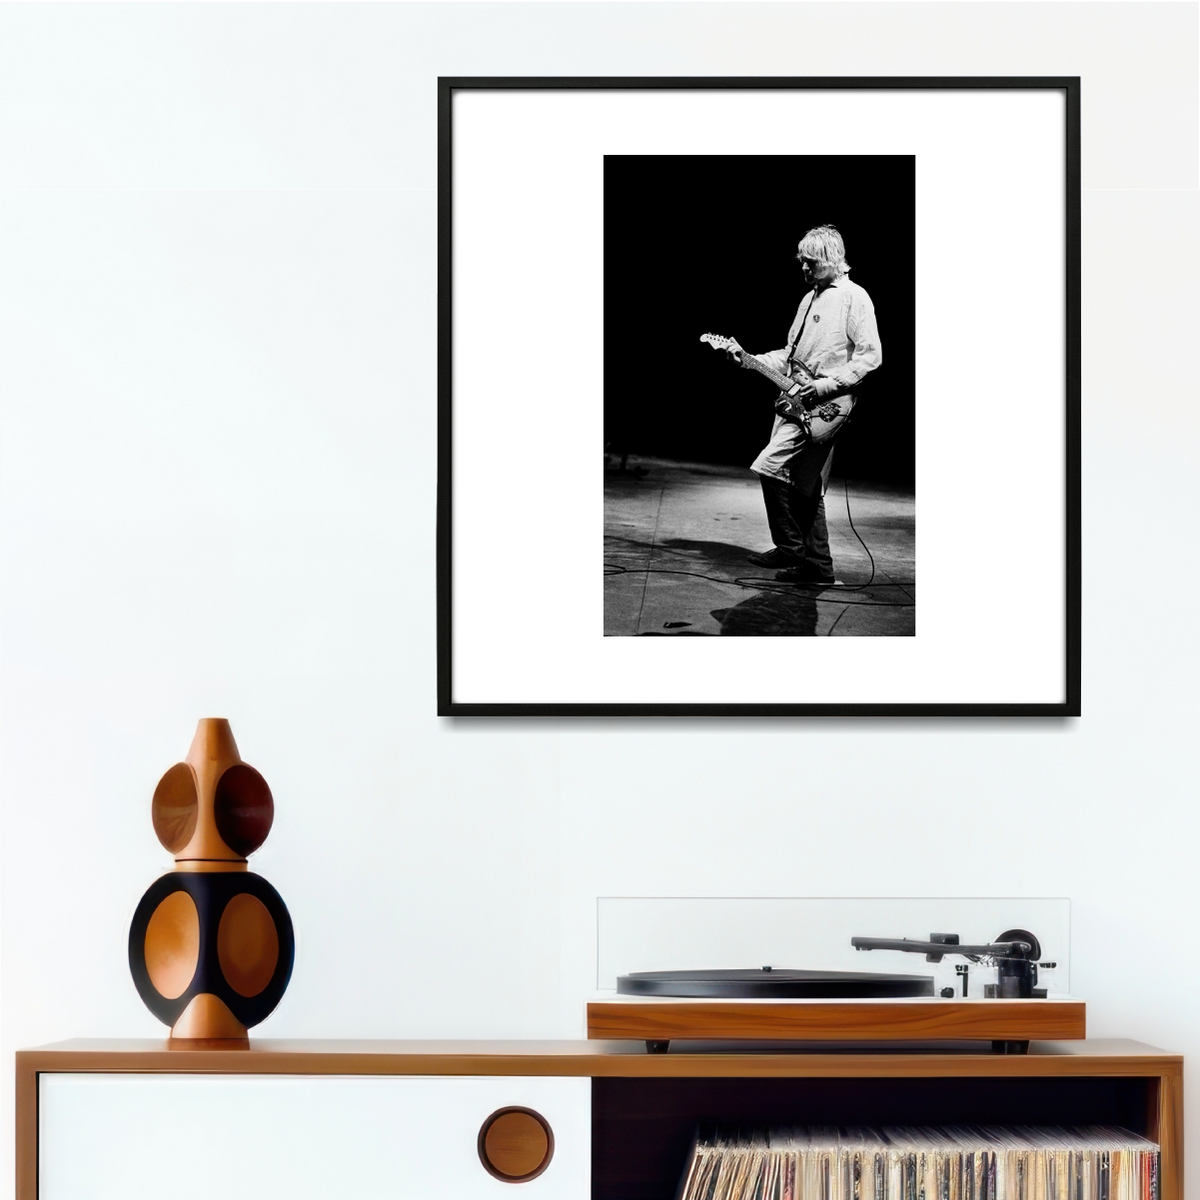 kurt cobain, reading festival, u.k. - 8/30/92  - 24 x 24 inch limited edition print